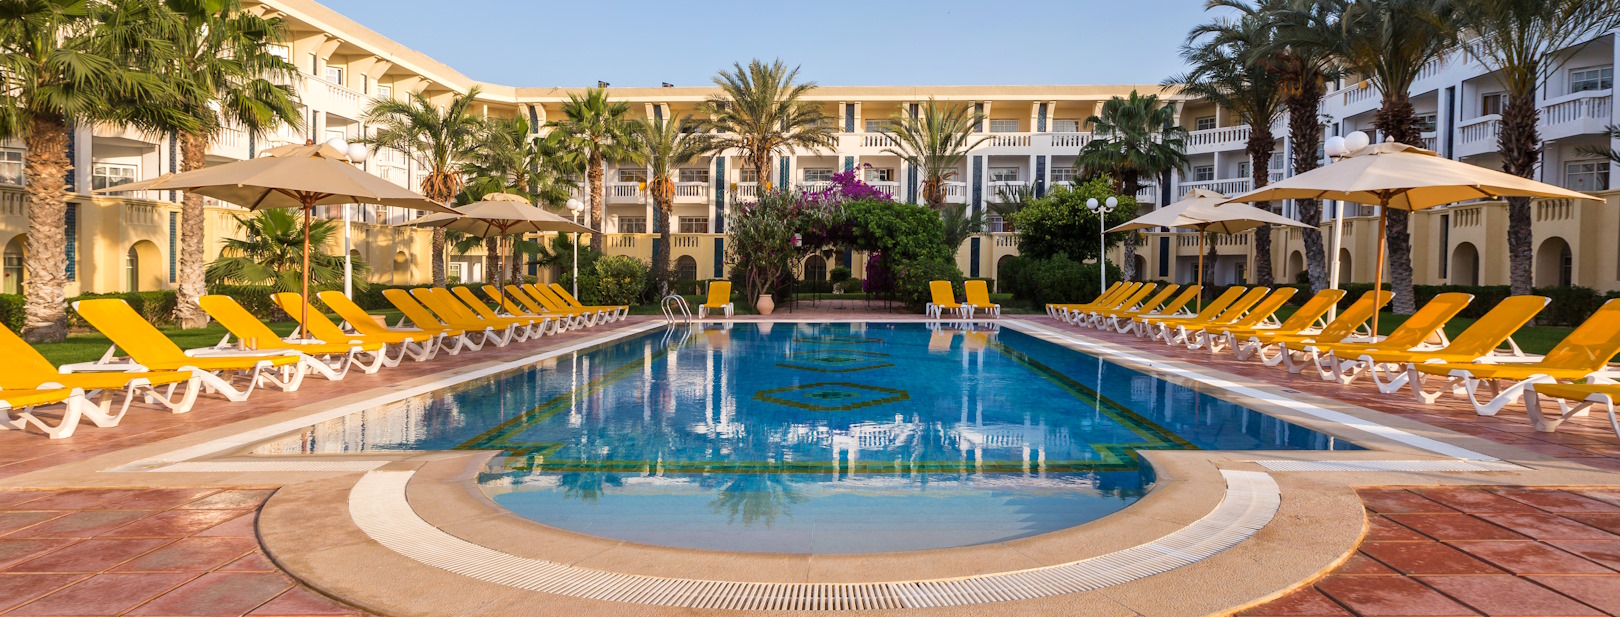 Tunisie - Hammamet - Hôtel Medina Belisaire 4* Long séjour